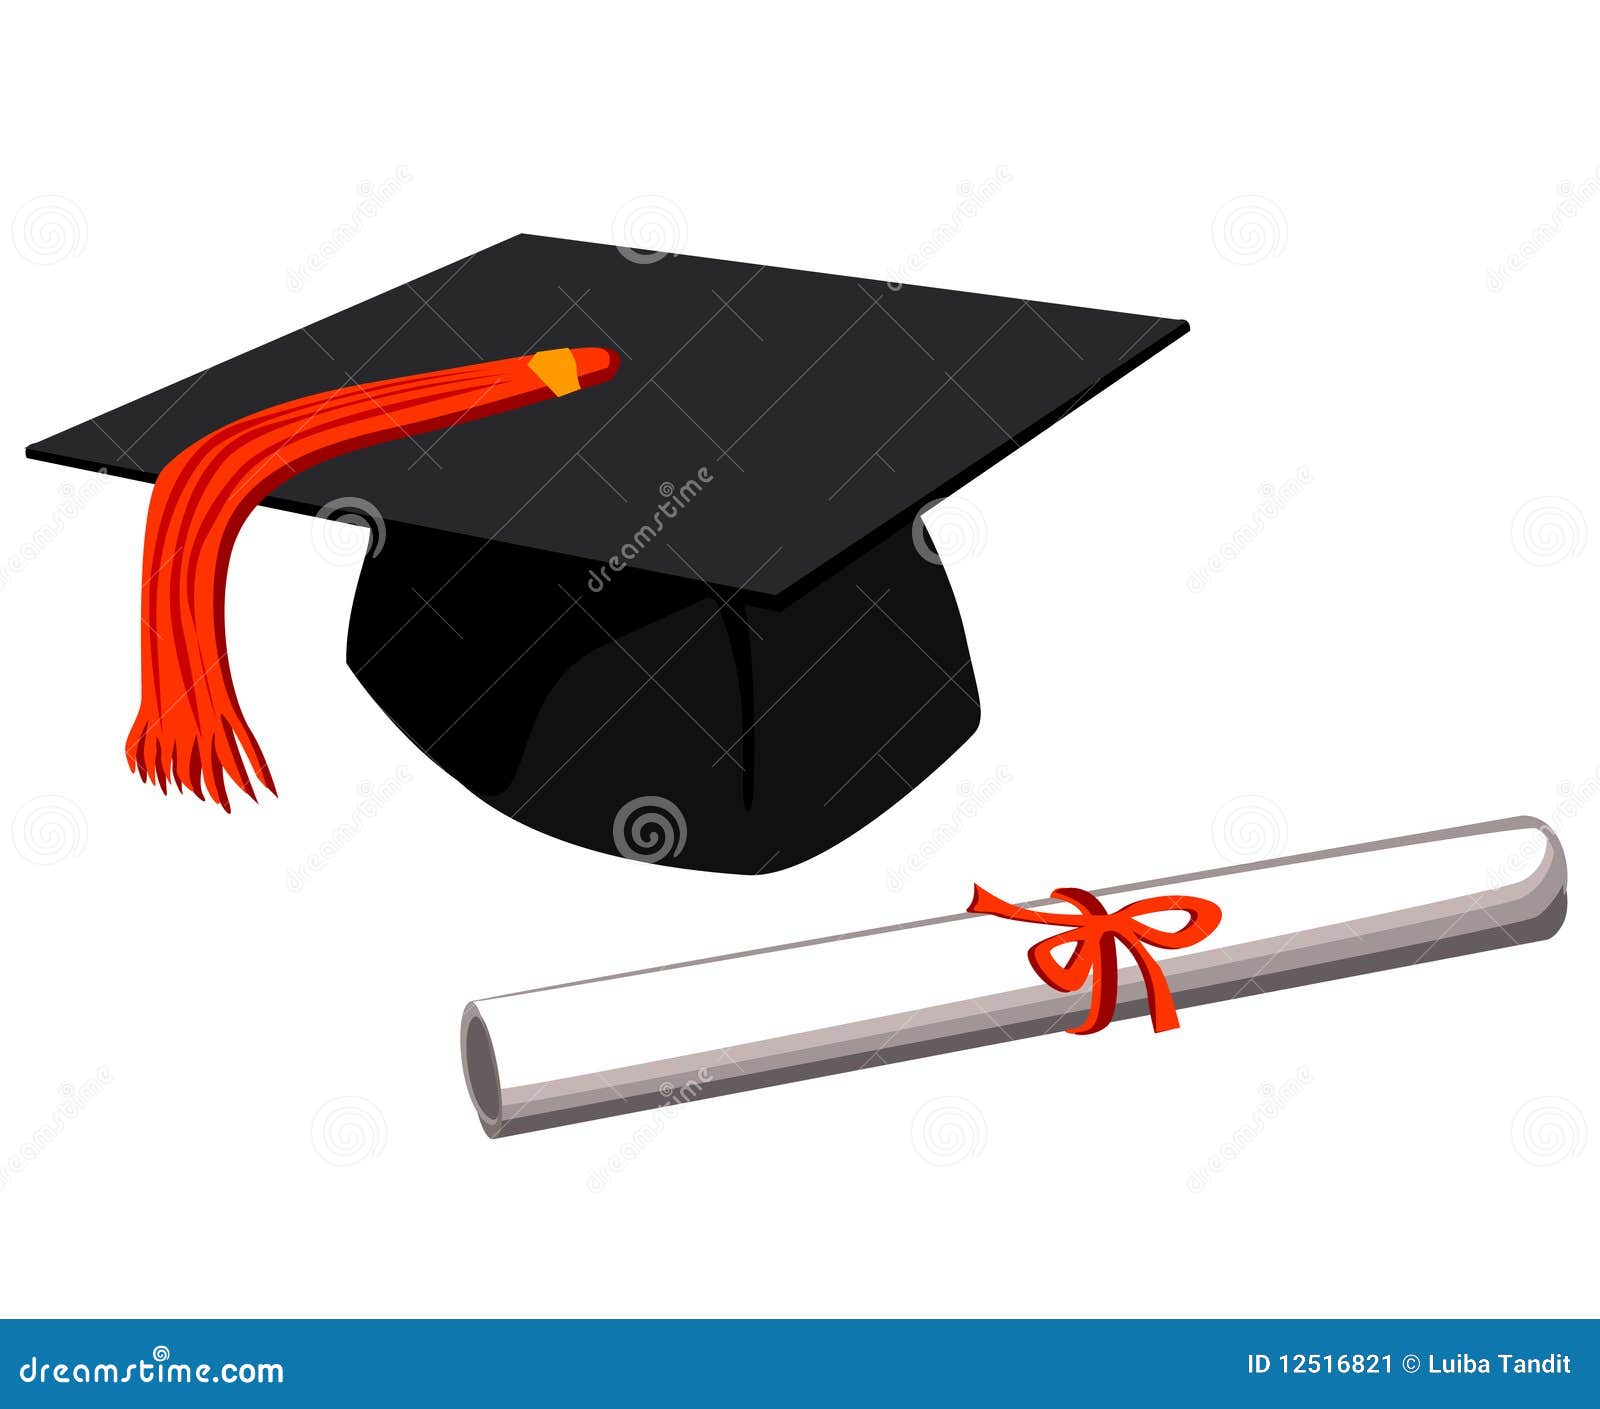 Graduation Cap Stock Image - Image: 12516821